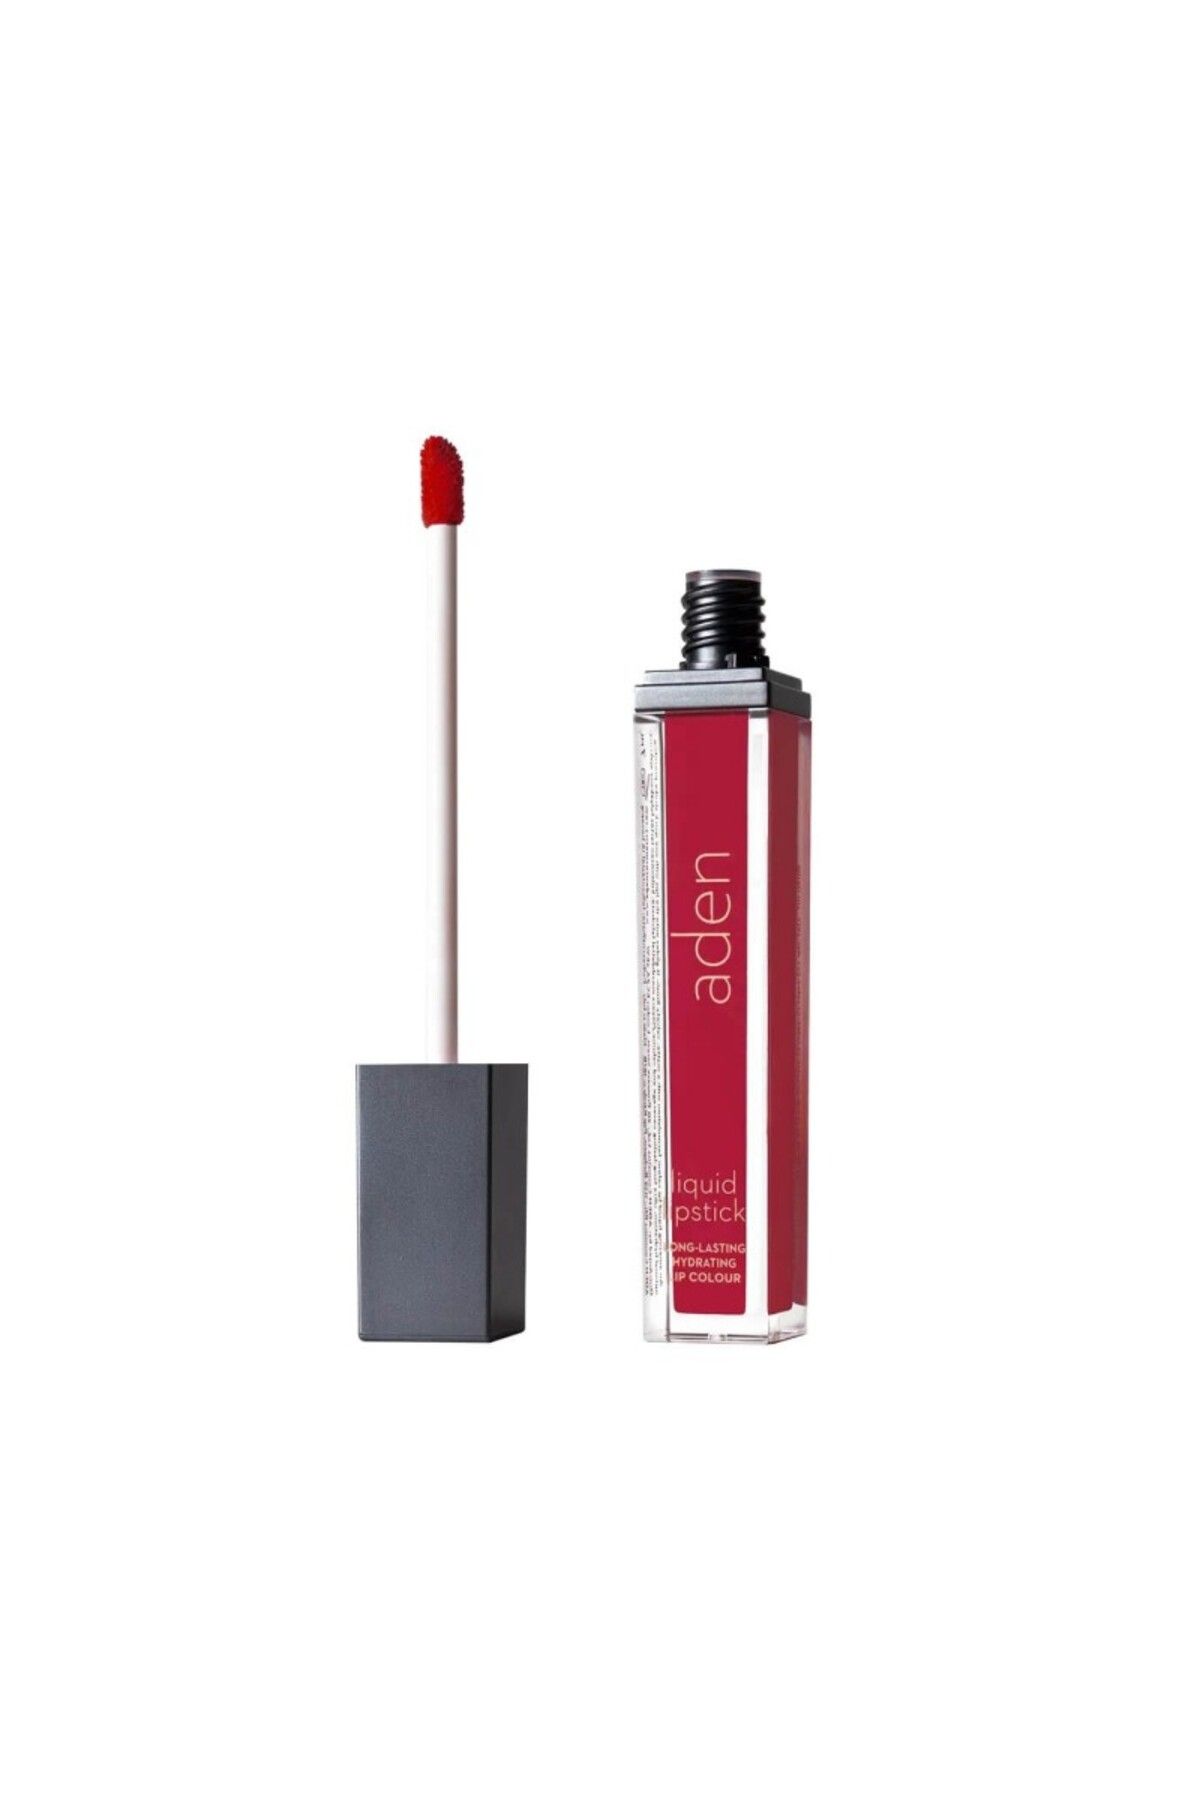 Aden Liquid Lipstick ( 09 Russian Red )